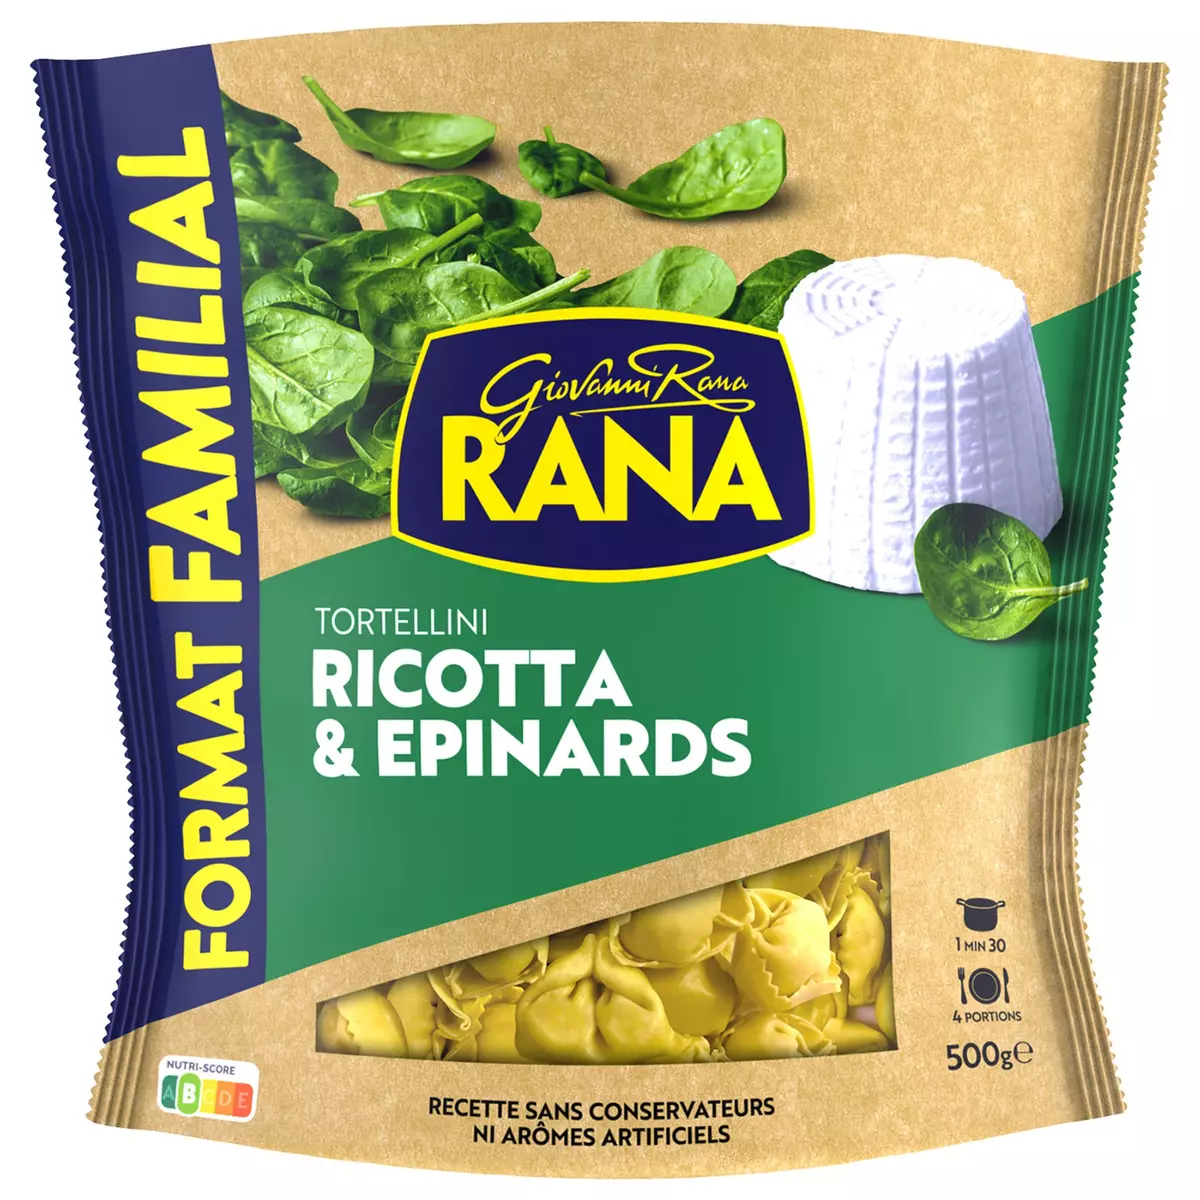 RANA Tortellini ricotta & épinards 4 portions 500g